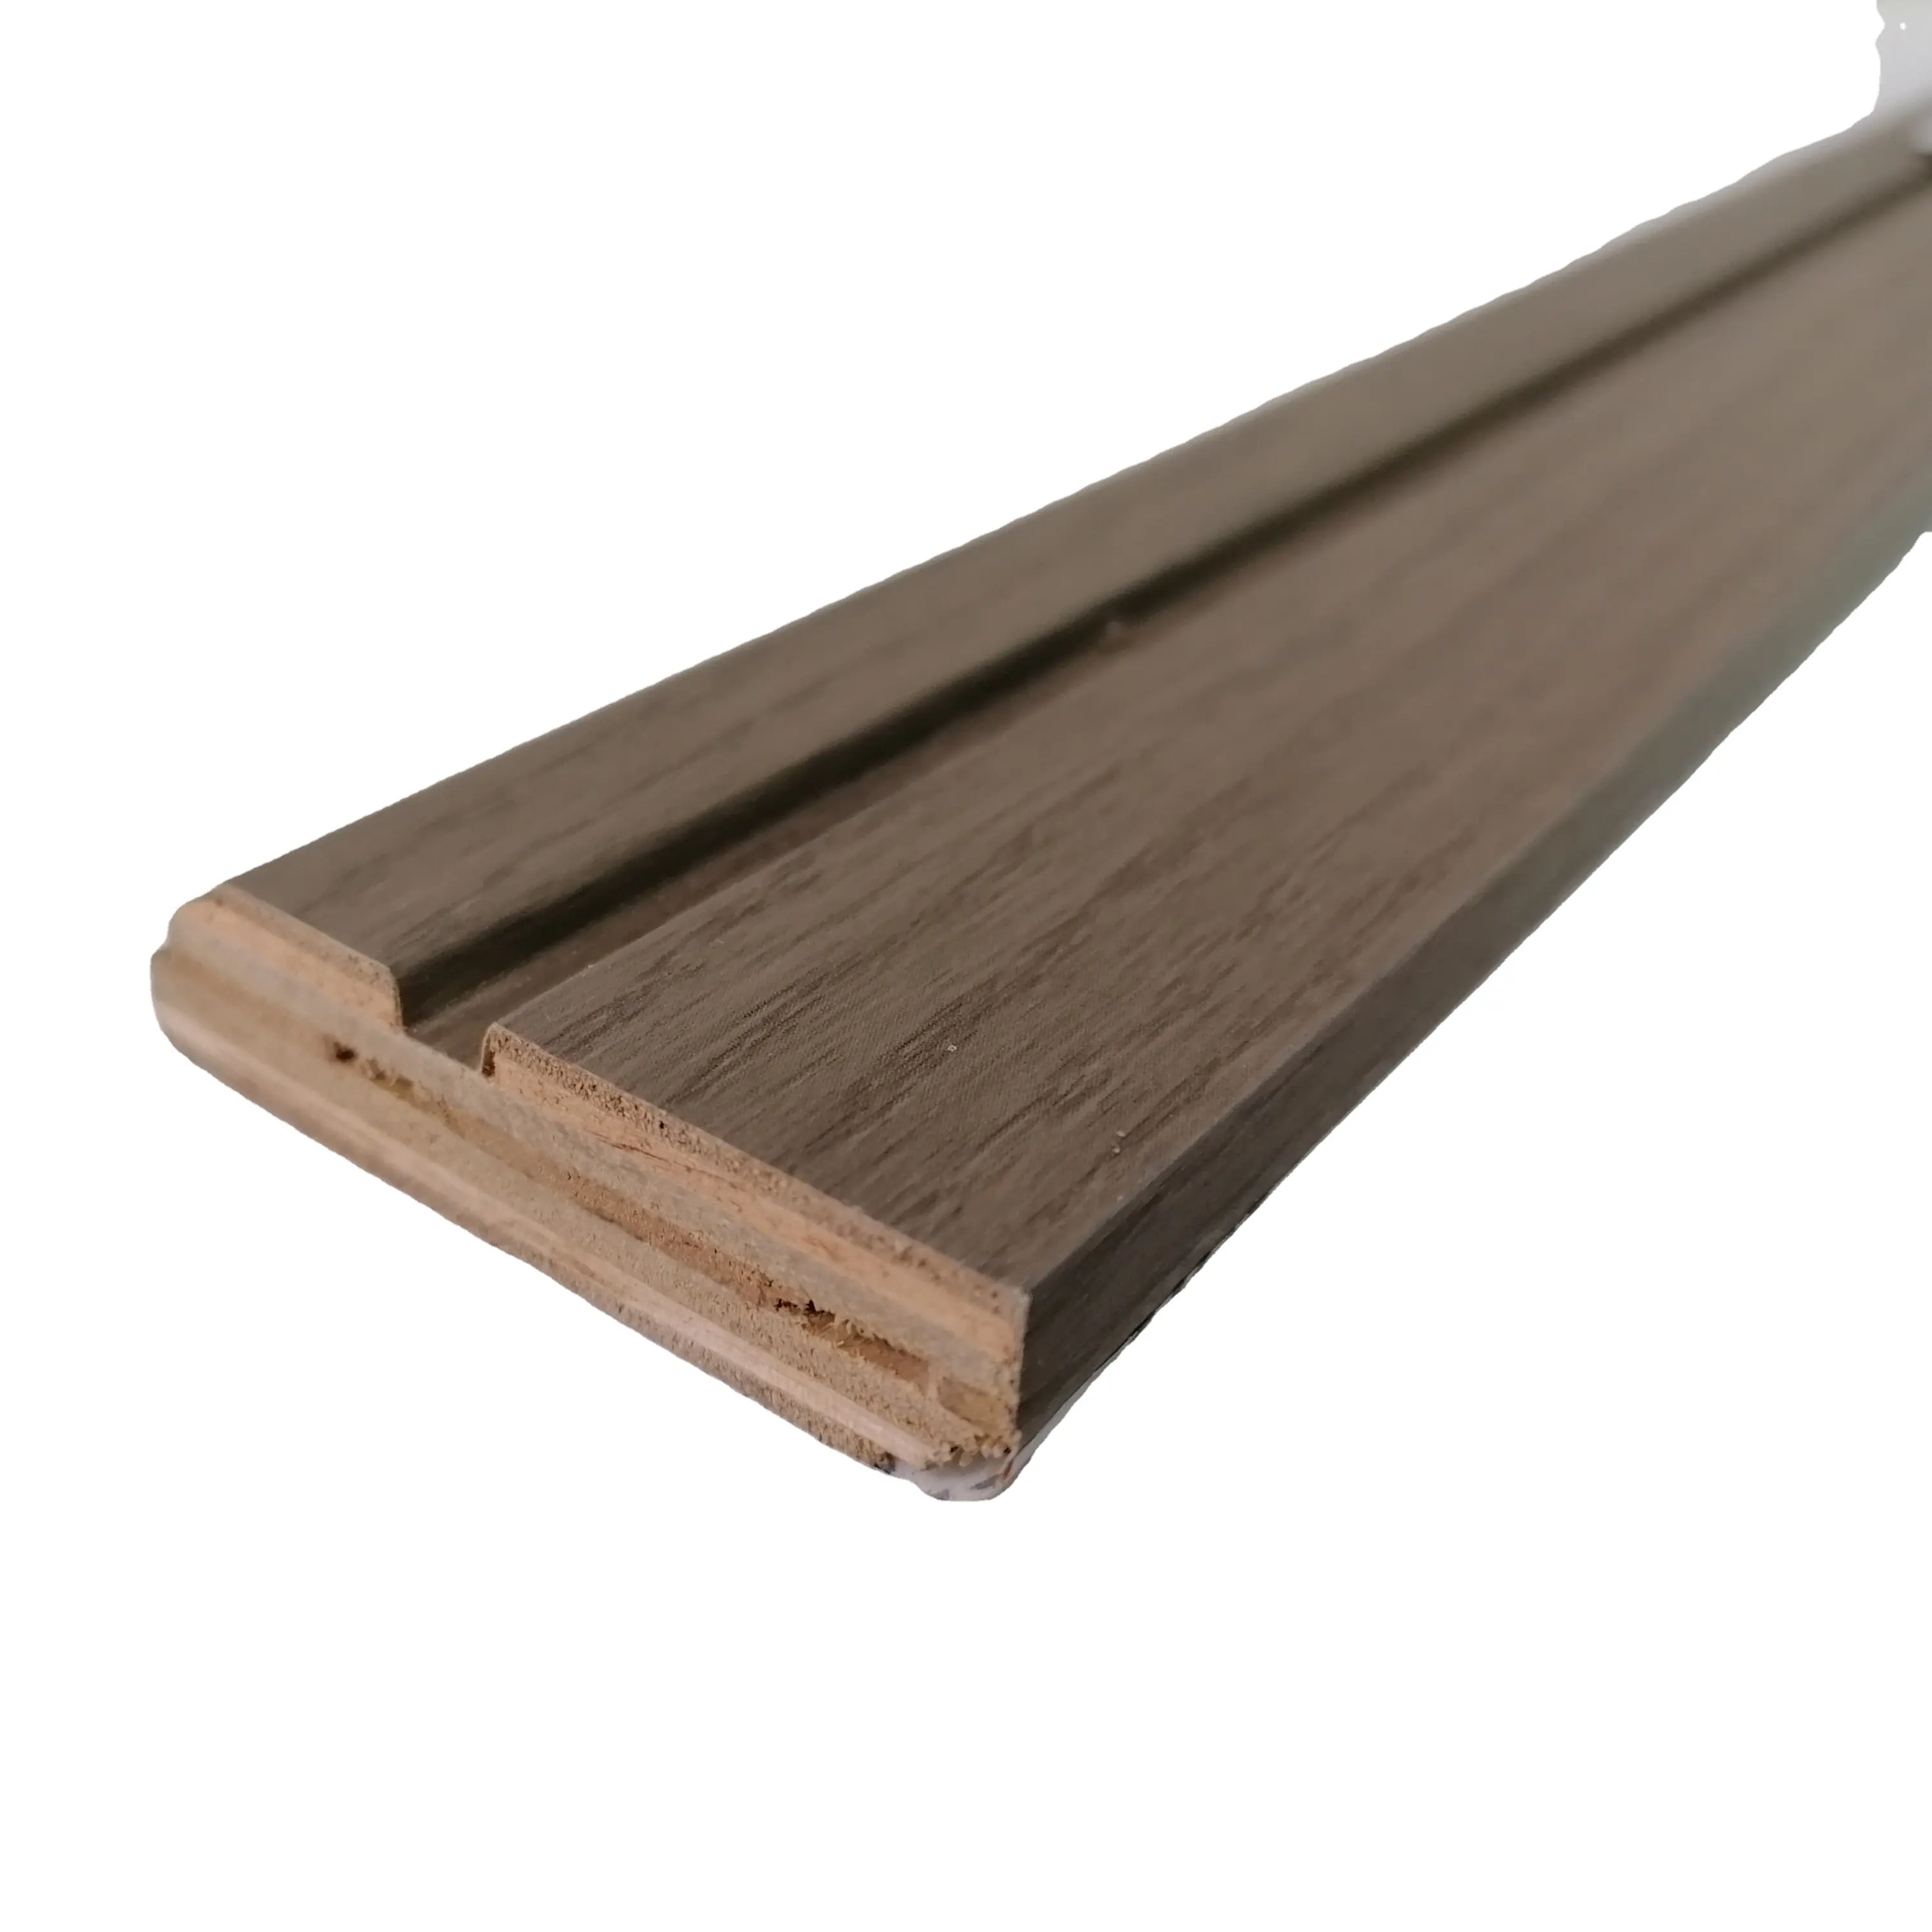 विनेमैक्स अनुकूलित रंग आकार ठोस लकड़ी स्कर्ट फर्श के लिए फर्श सजावट लाइन बेसेबोर्ड मोल्डिंग आंतरिक ट्रिम